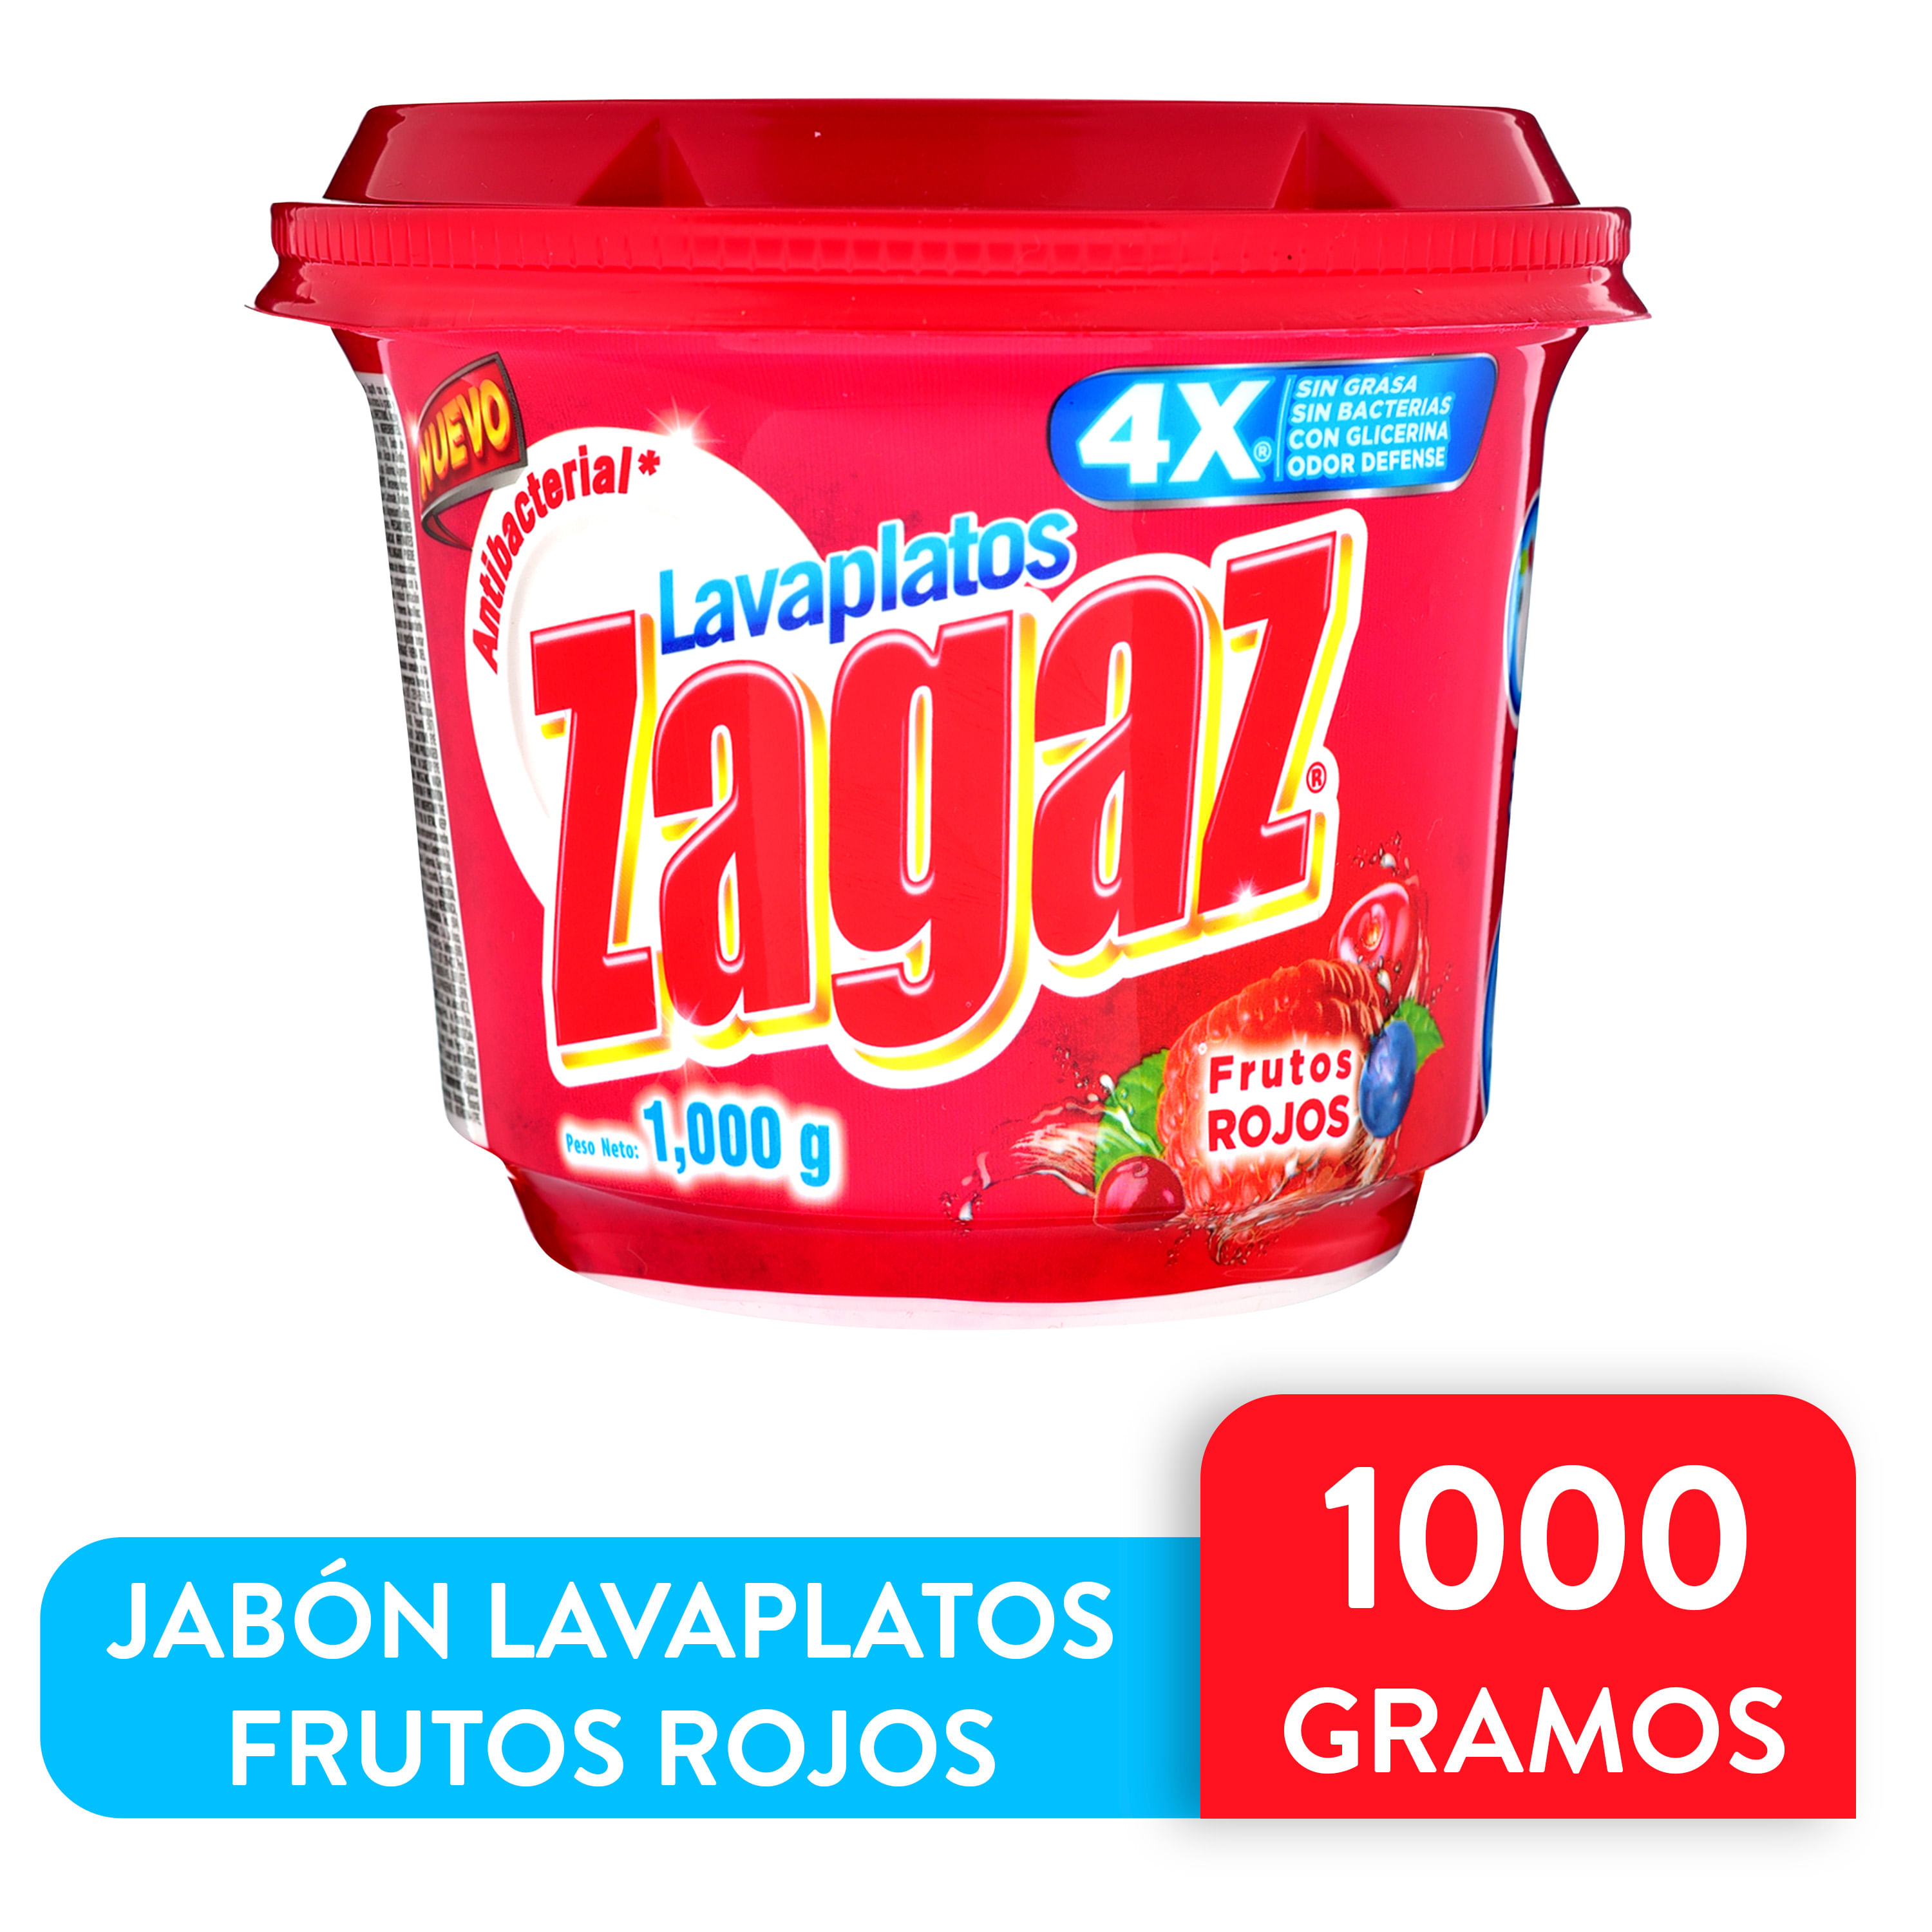 Lavaplatos-Zagaz-Frutos-Rojos-1000gr-1-32330